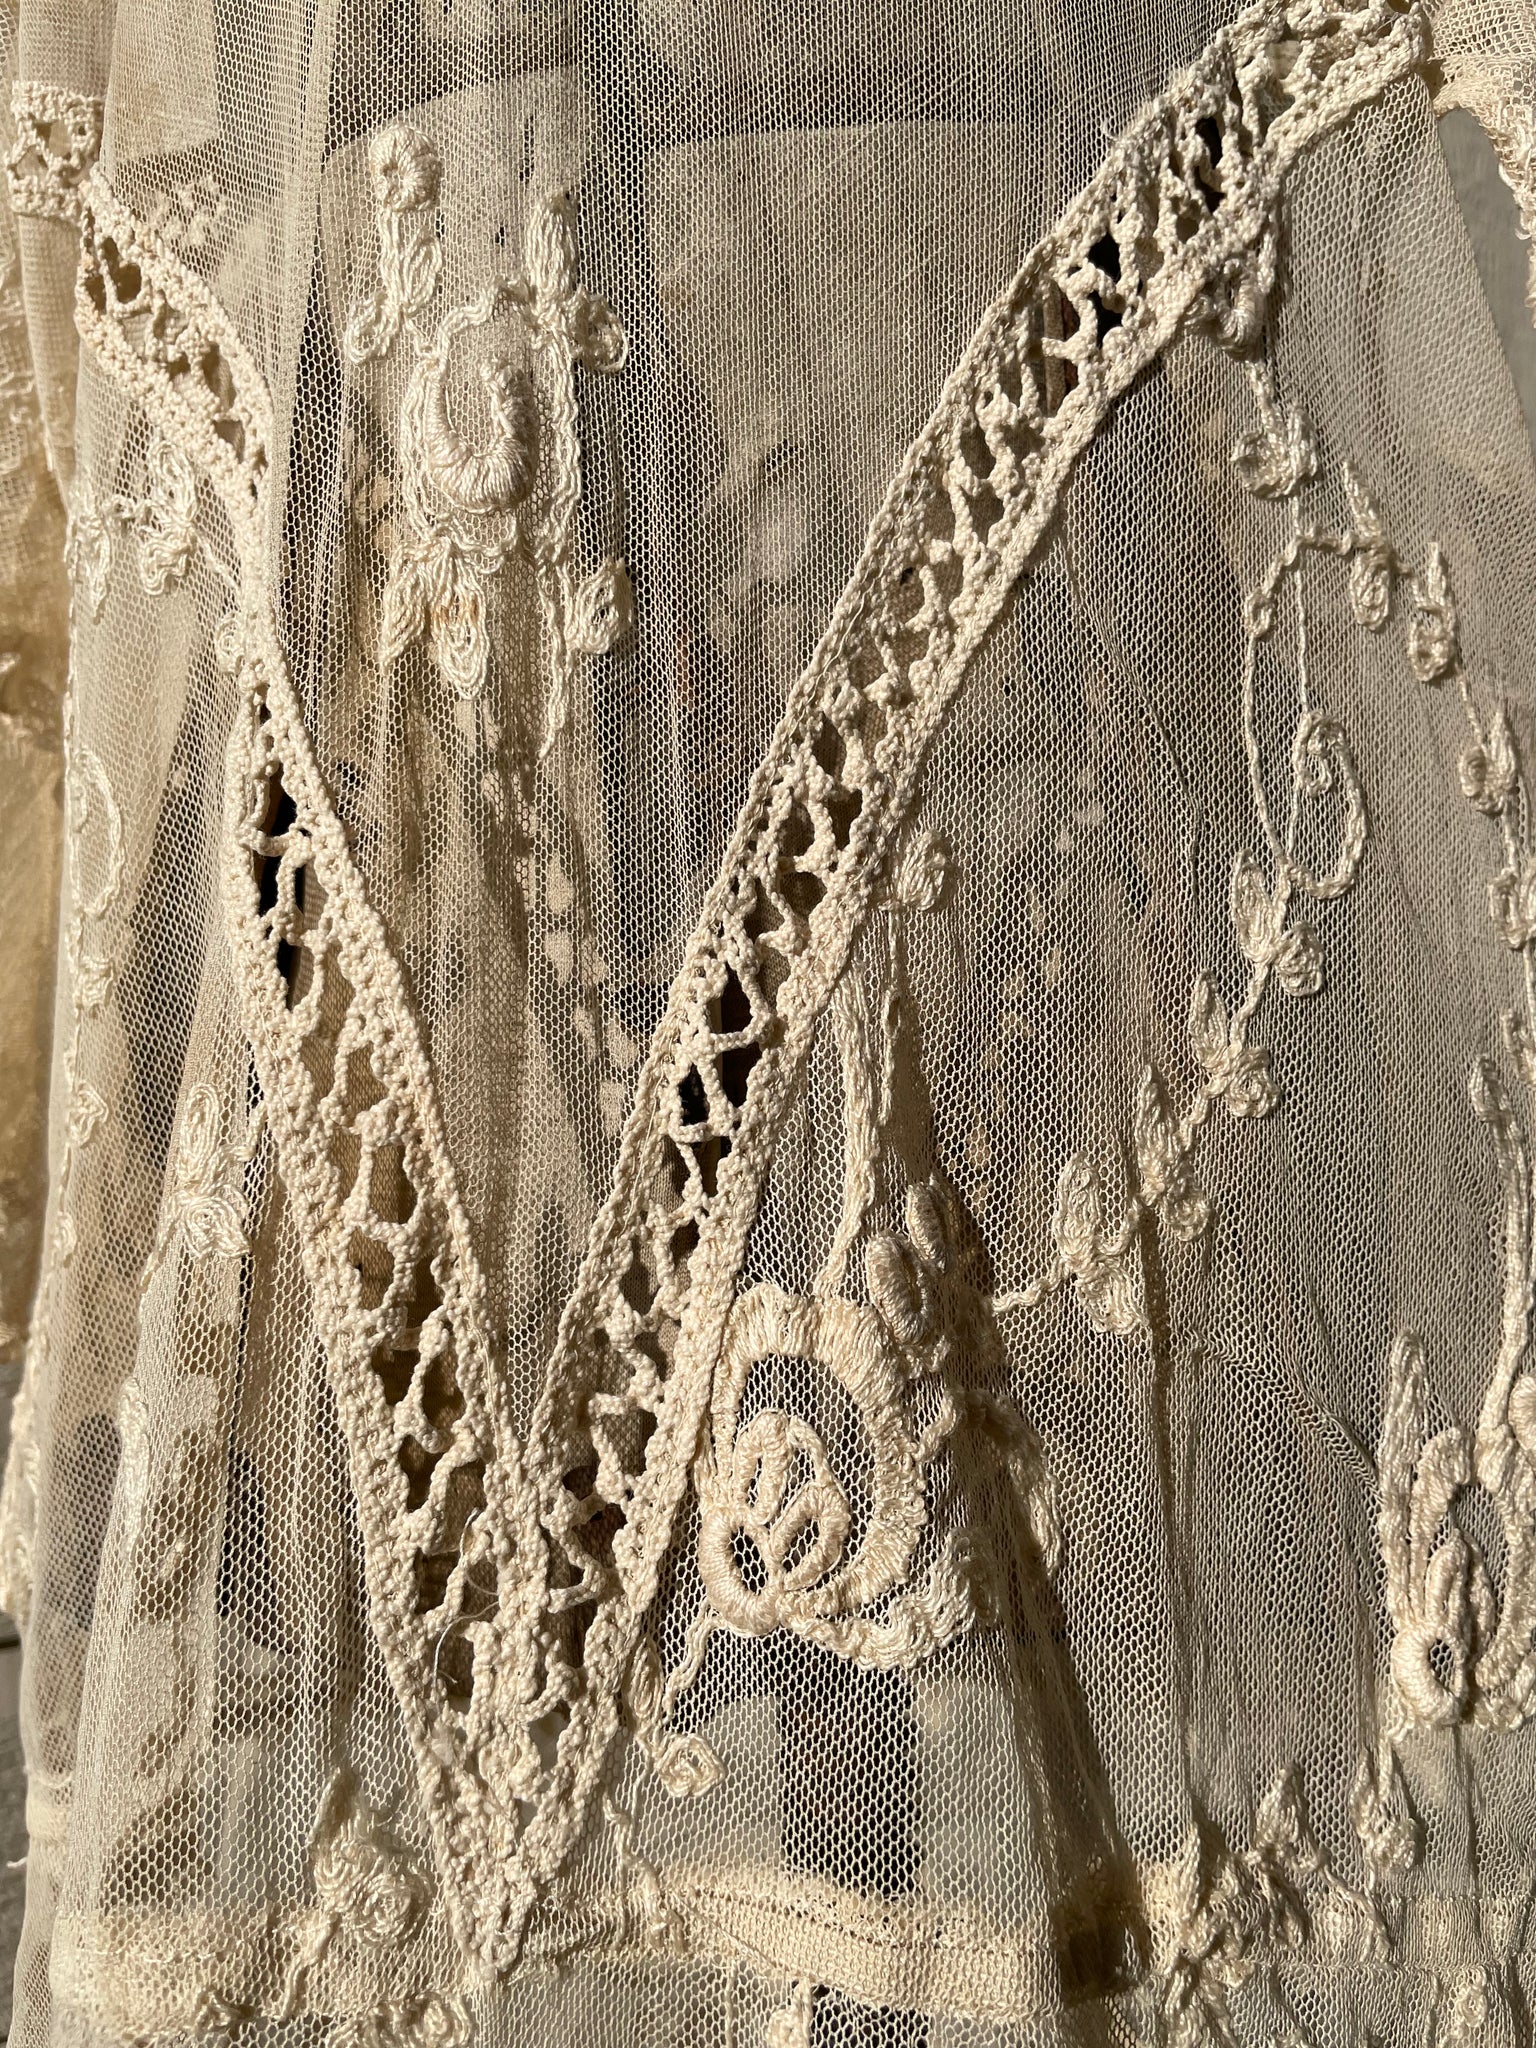 Late Edwardian Ecru Tambour Lace Gown